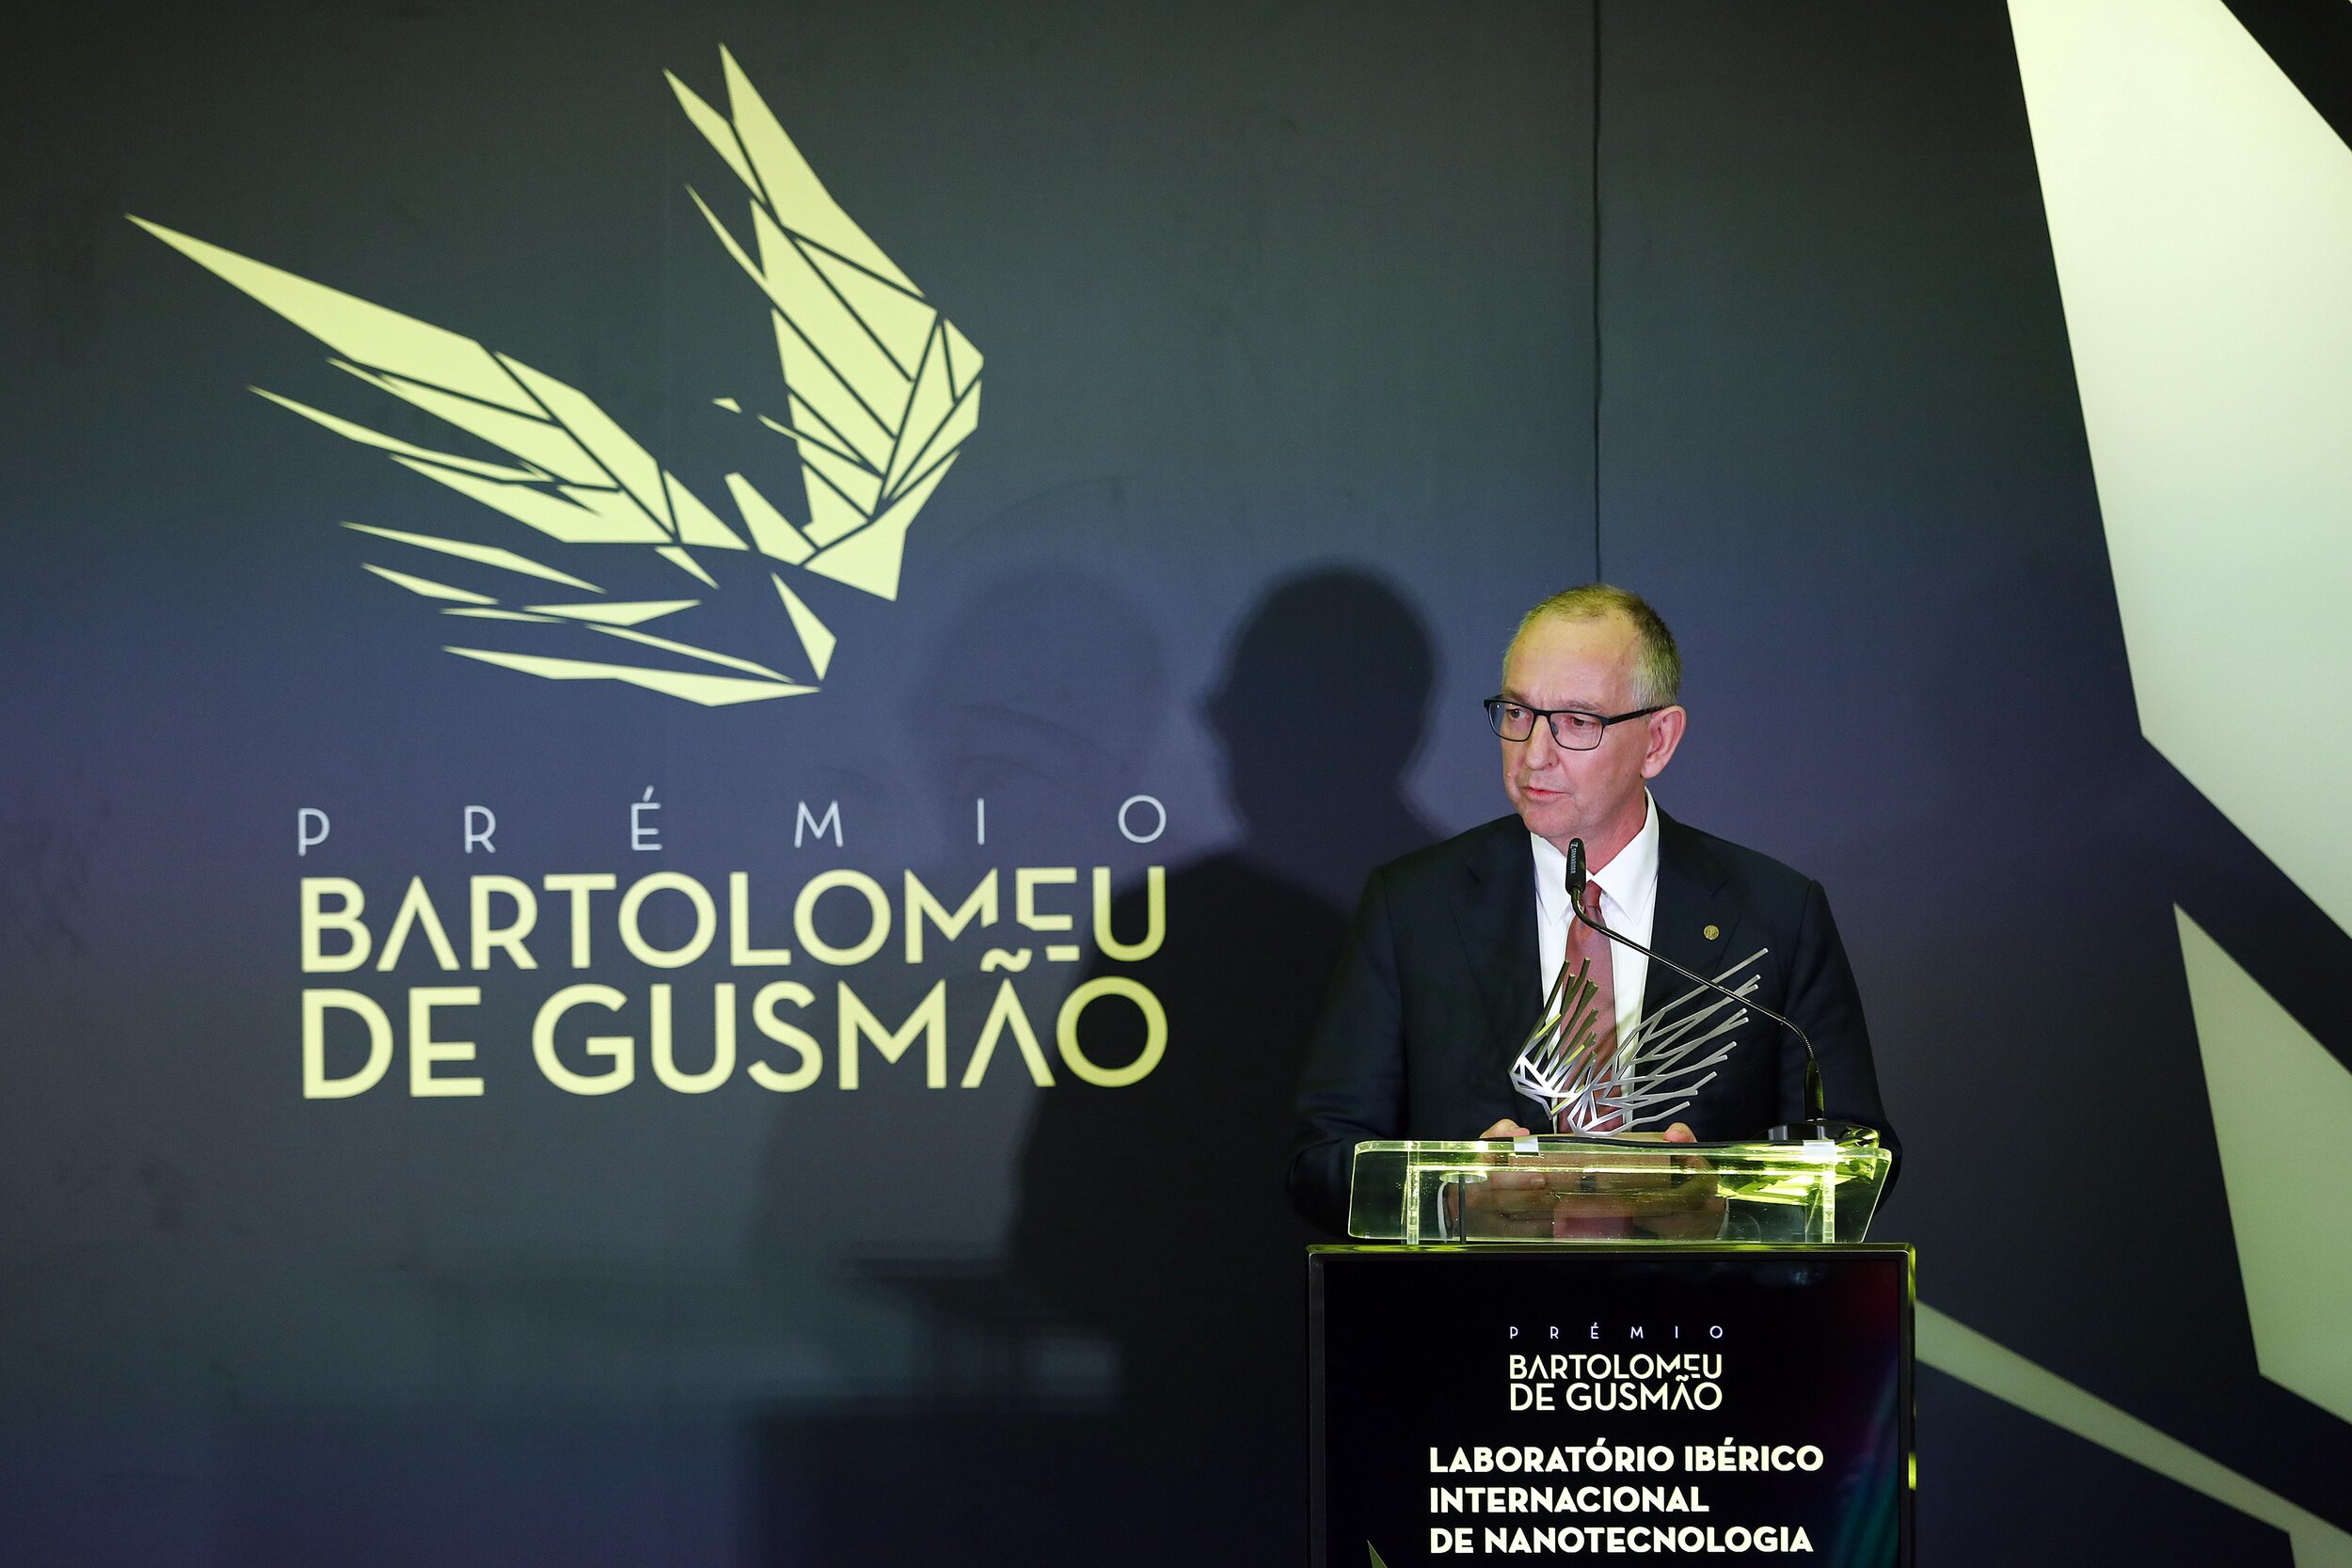 Prof. Lars Montelius receives the Bartolomeu de Gusmão Award on Intellectual Property